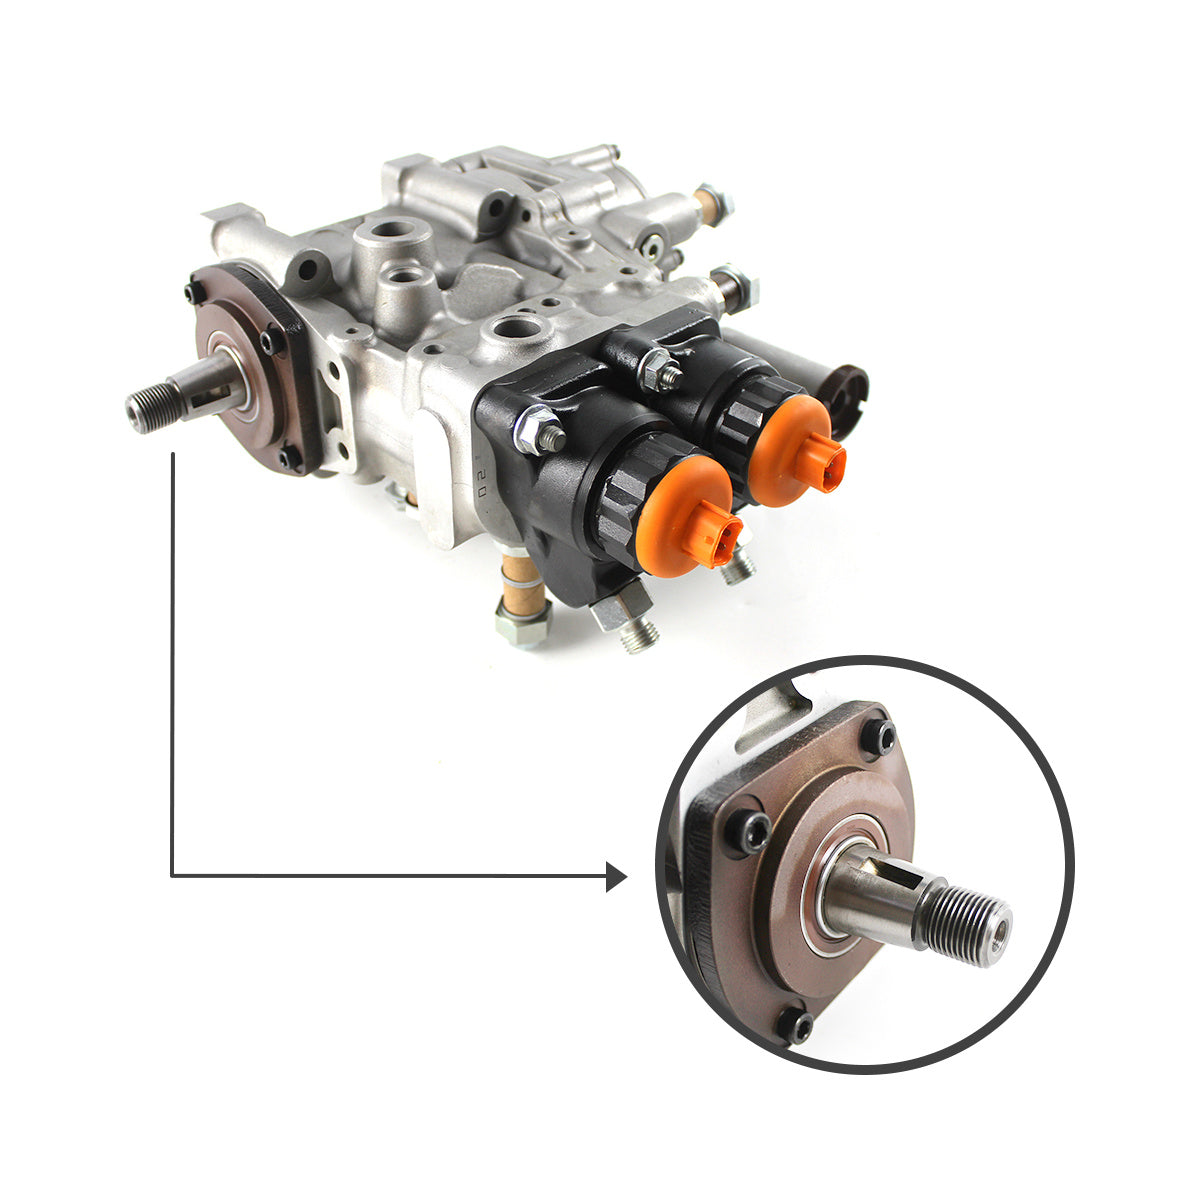 6156-71-1112 Fuel Injection Pump for Komatsu PC450-7 6D125 Engine - Sinocmp